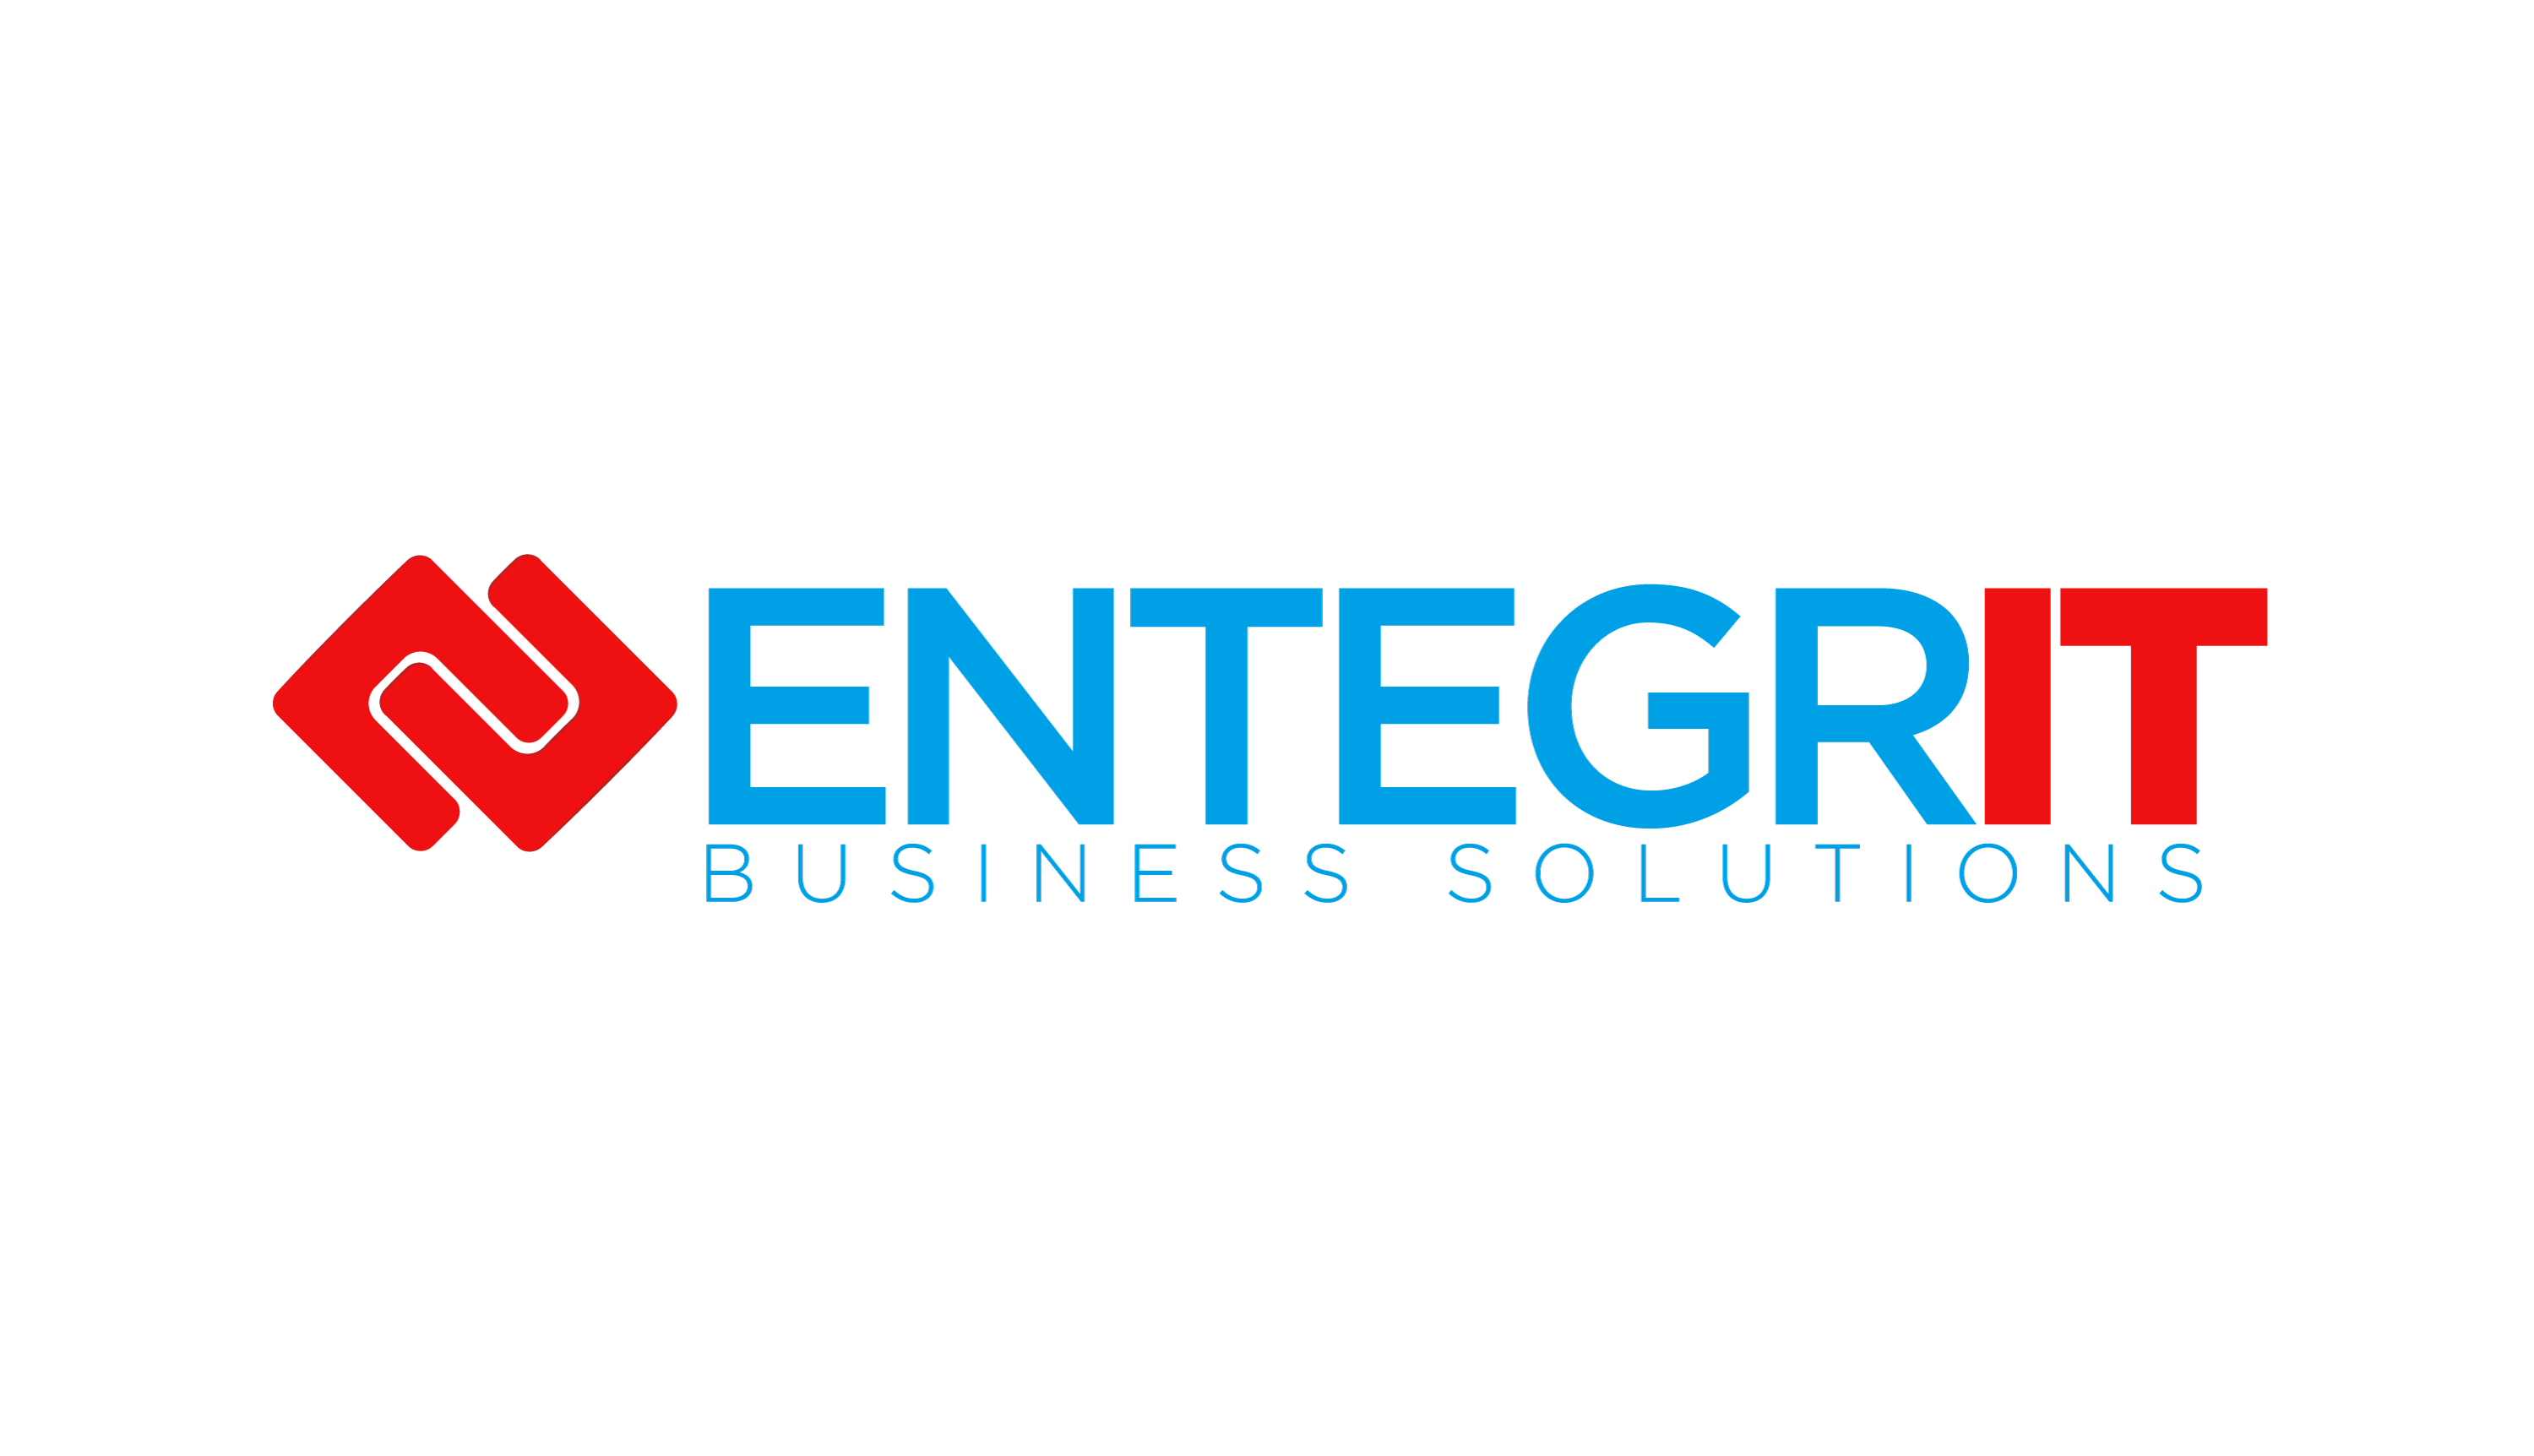 Entegrit Business Solutions